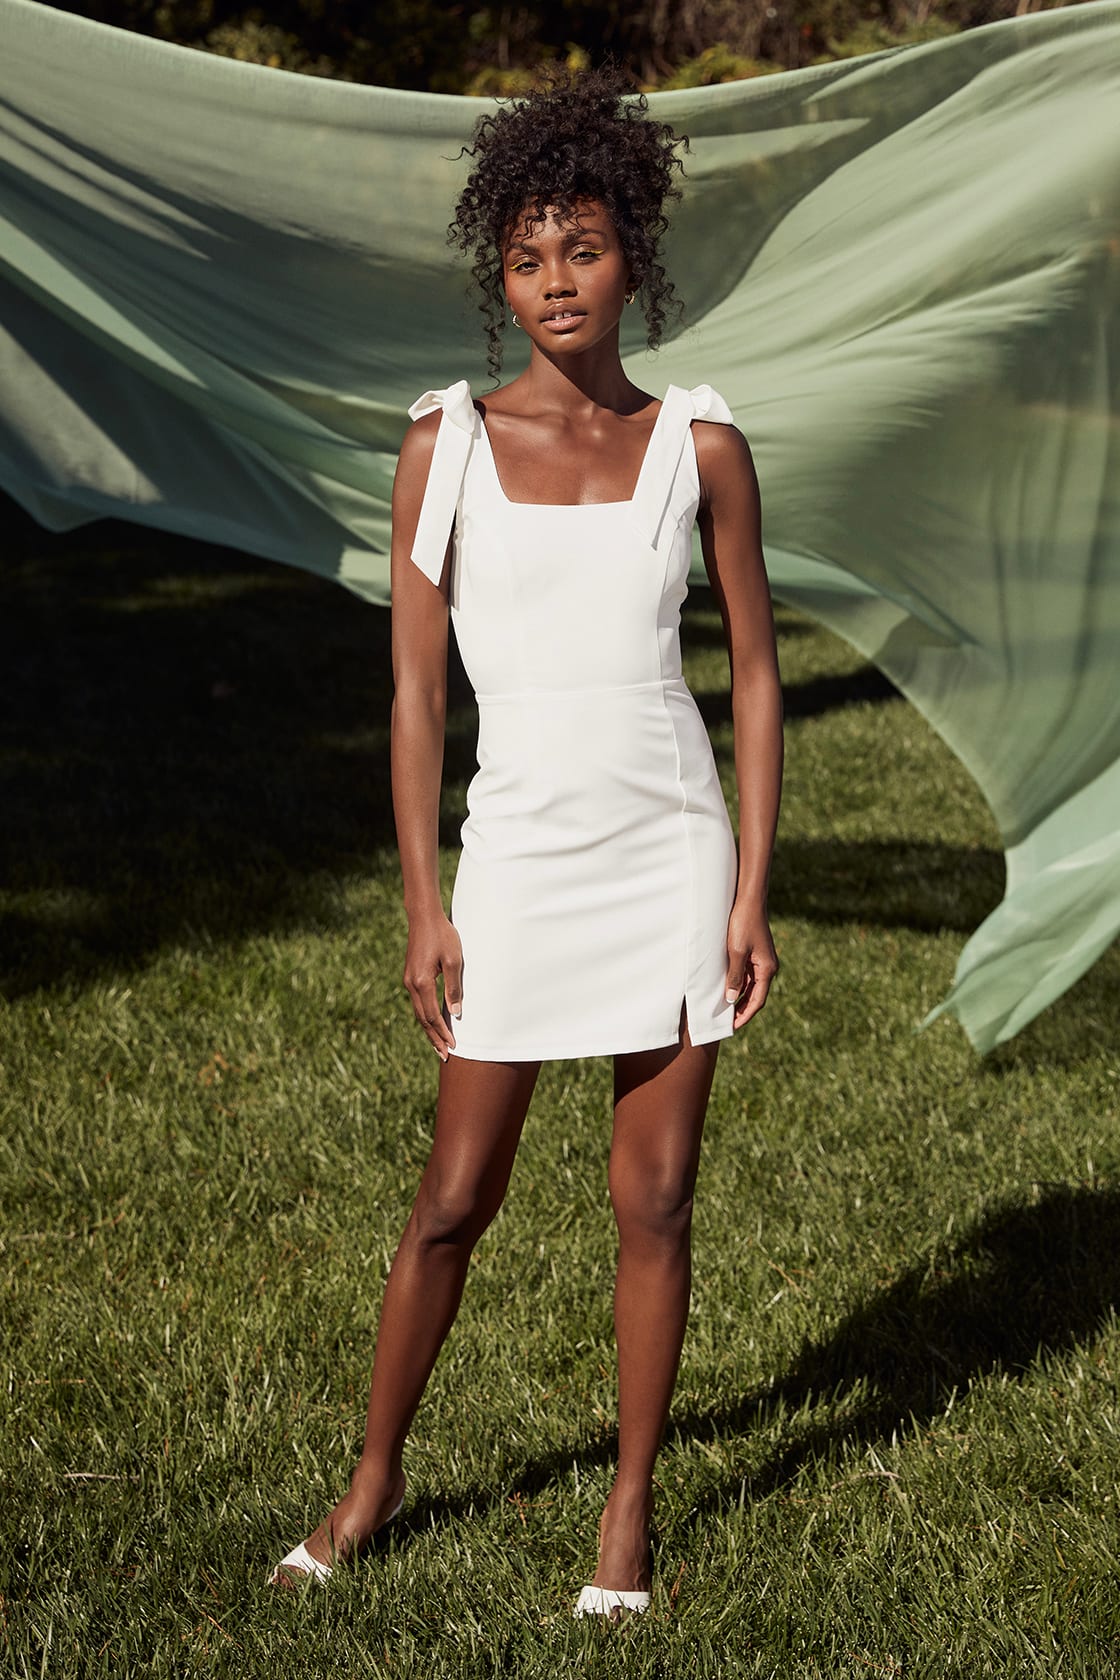 28 Shoes To Wear With A White Dress - Lulus.com Fashion Blog